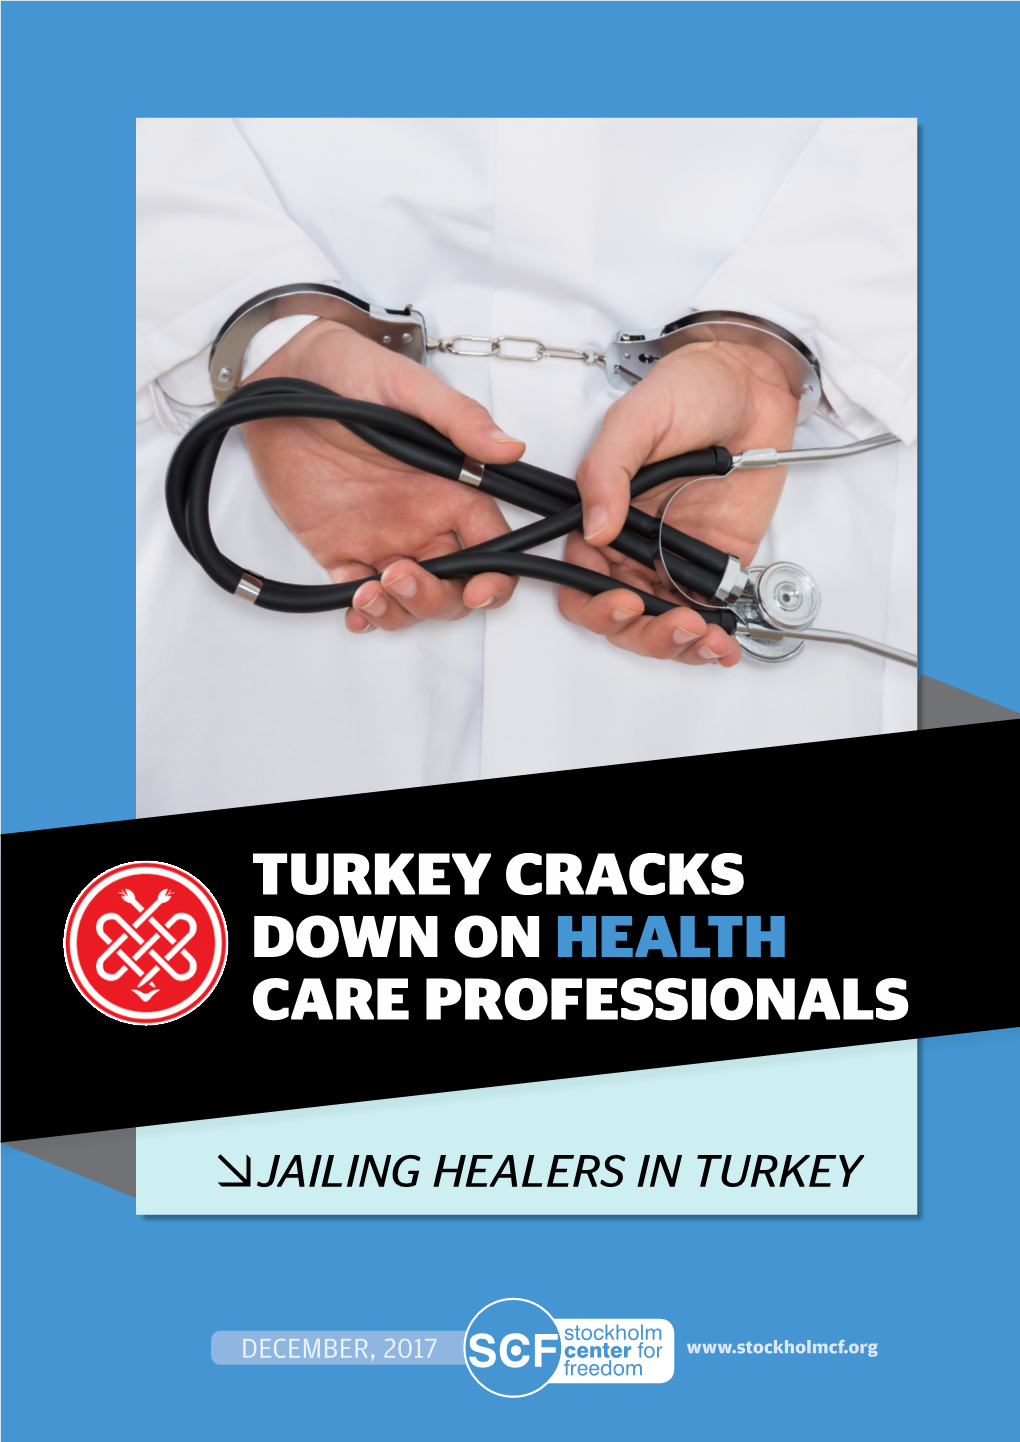 Turkey Cracks Down on Health Care Professionals